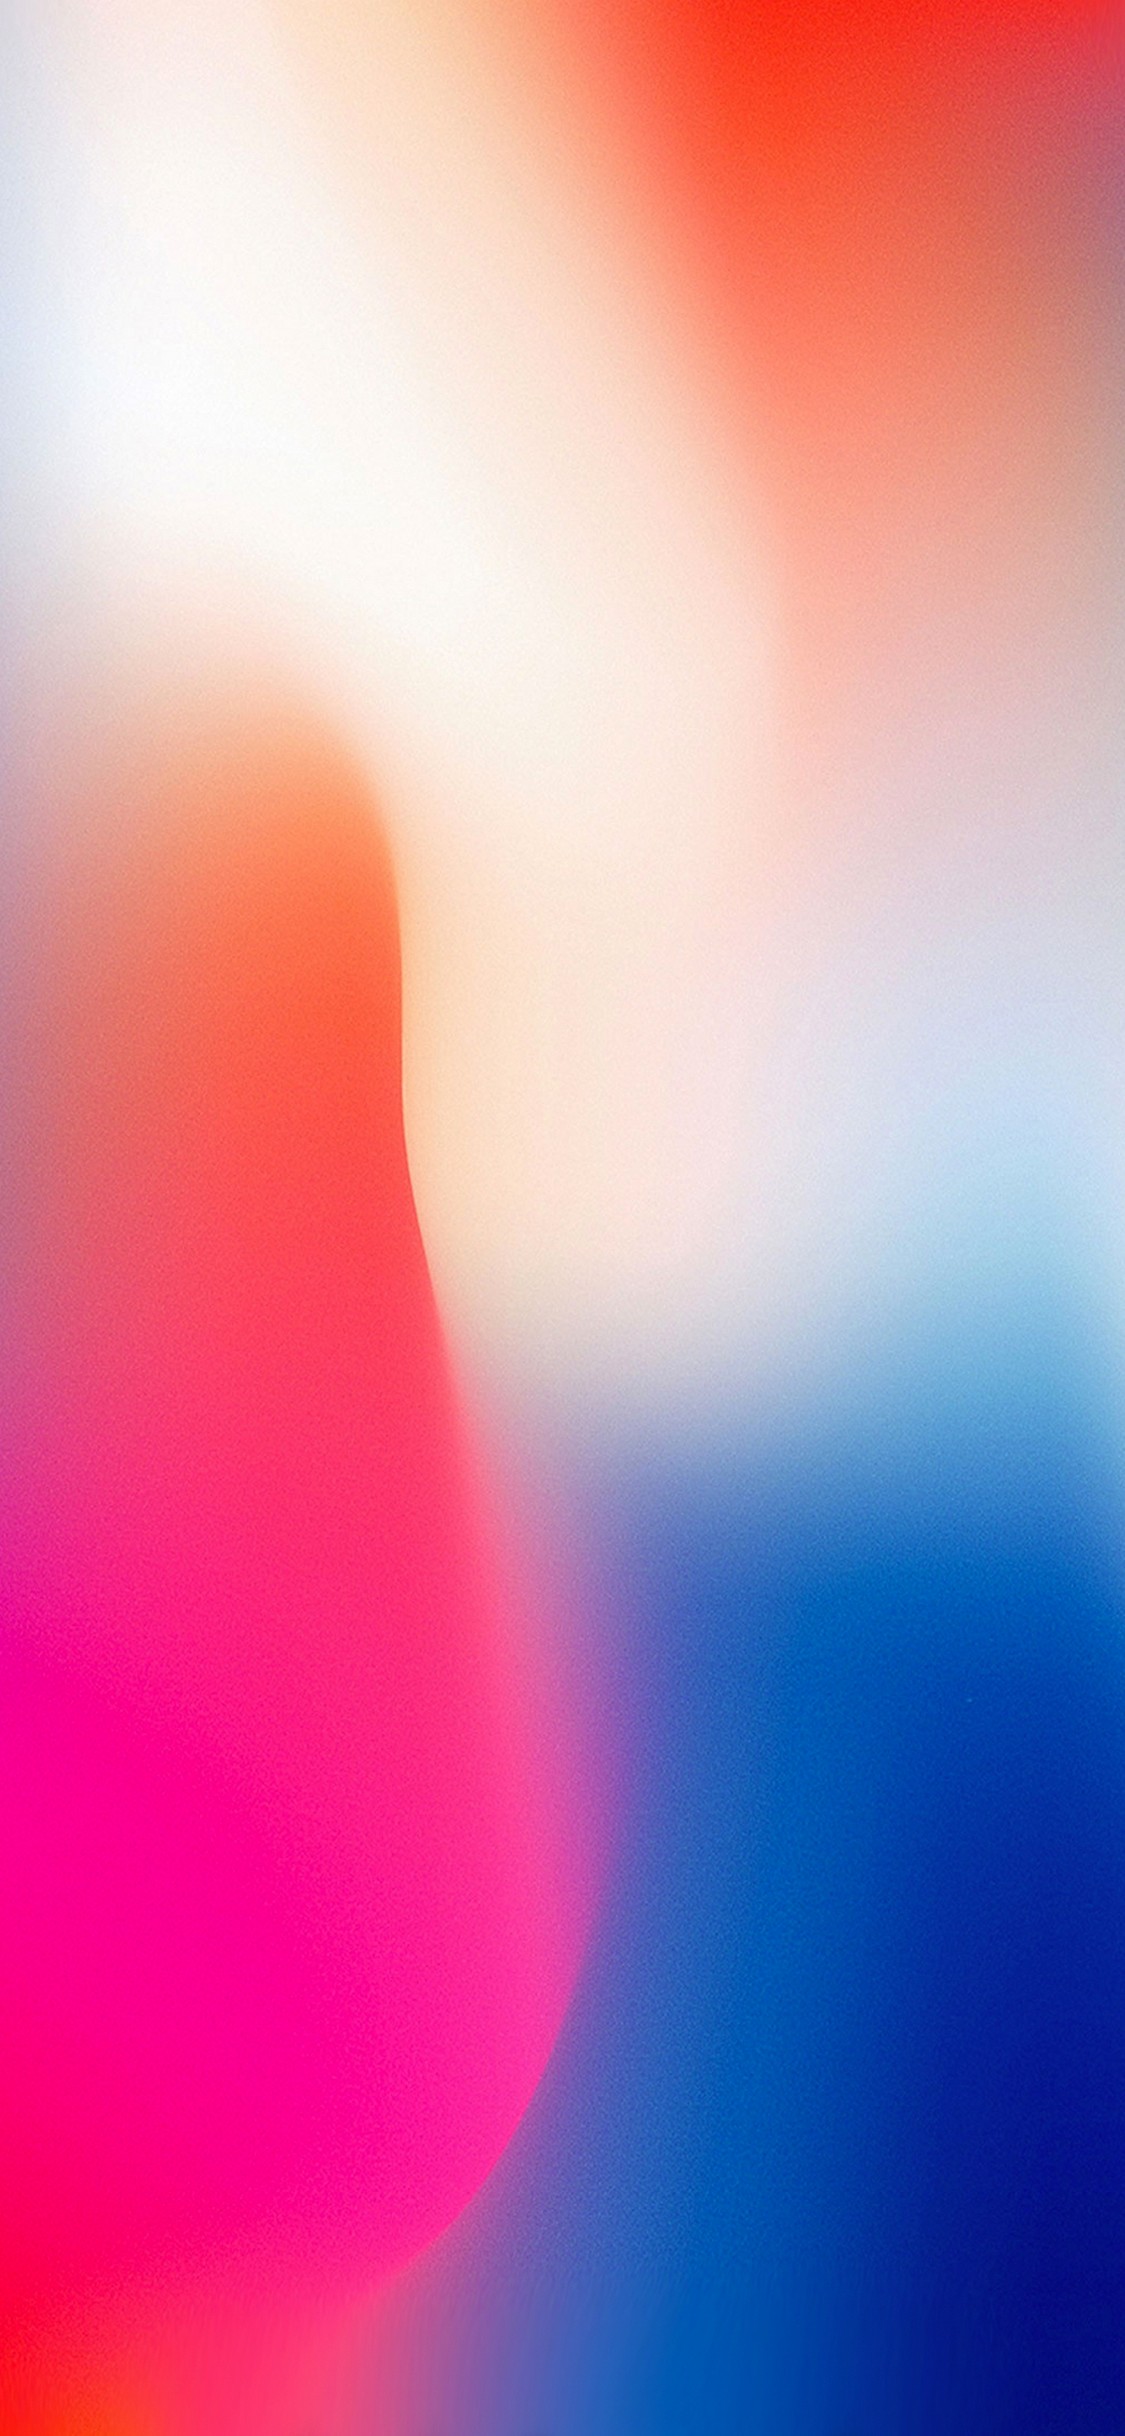 iPhone X Wallpaper HD - 2020 Cute